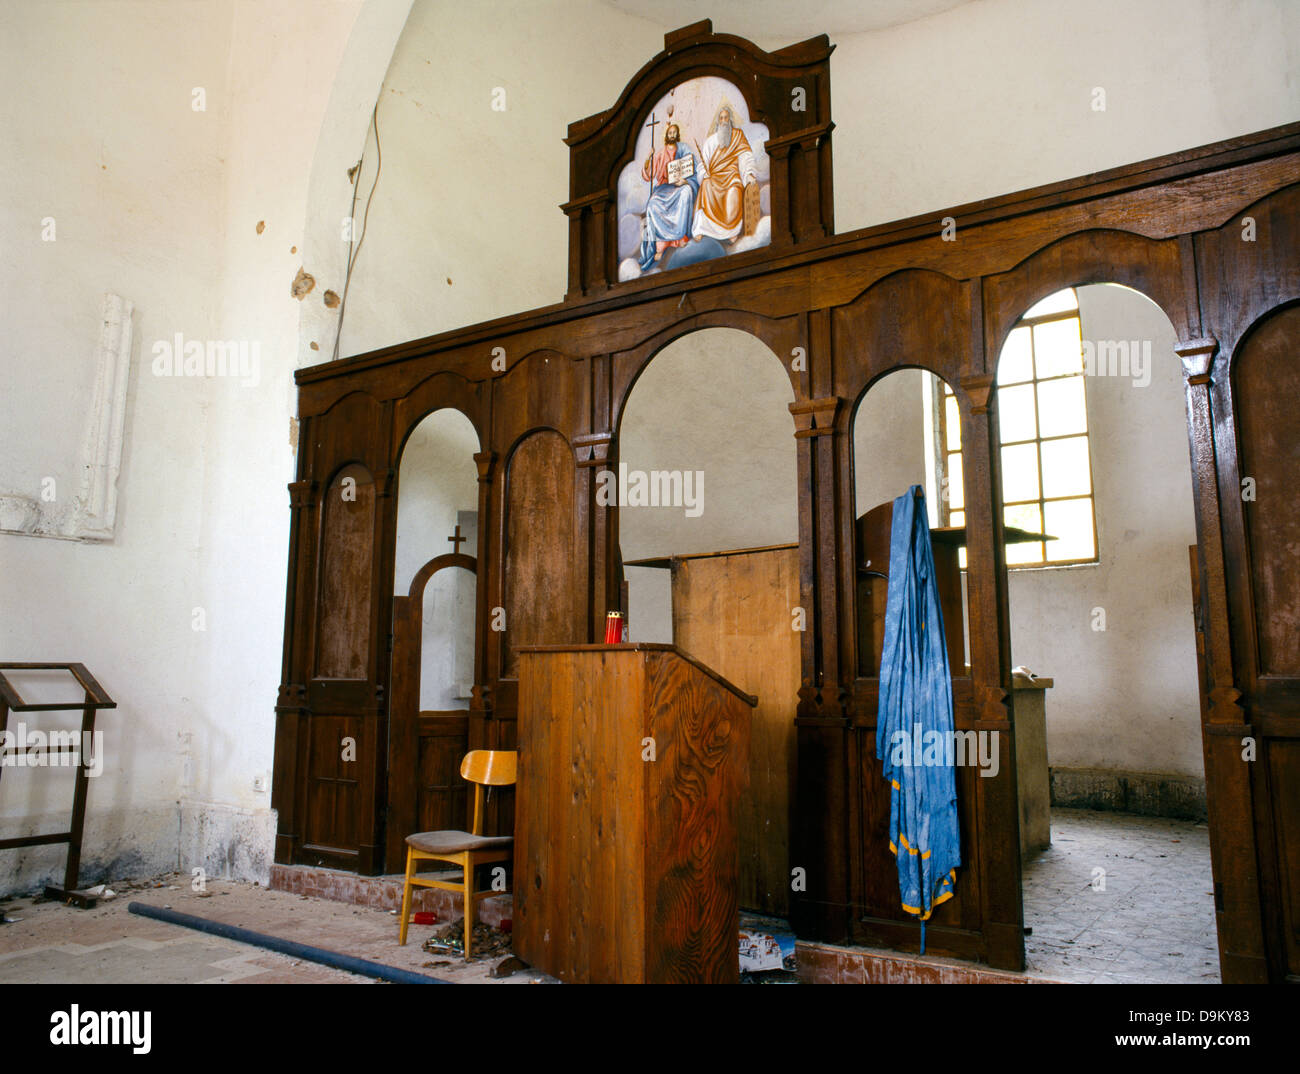 Krajina Region Croatia Wrecked Orthodox Church Bullet Marks On Wall following war Stock Photo